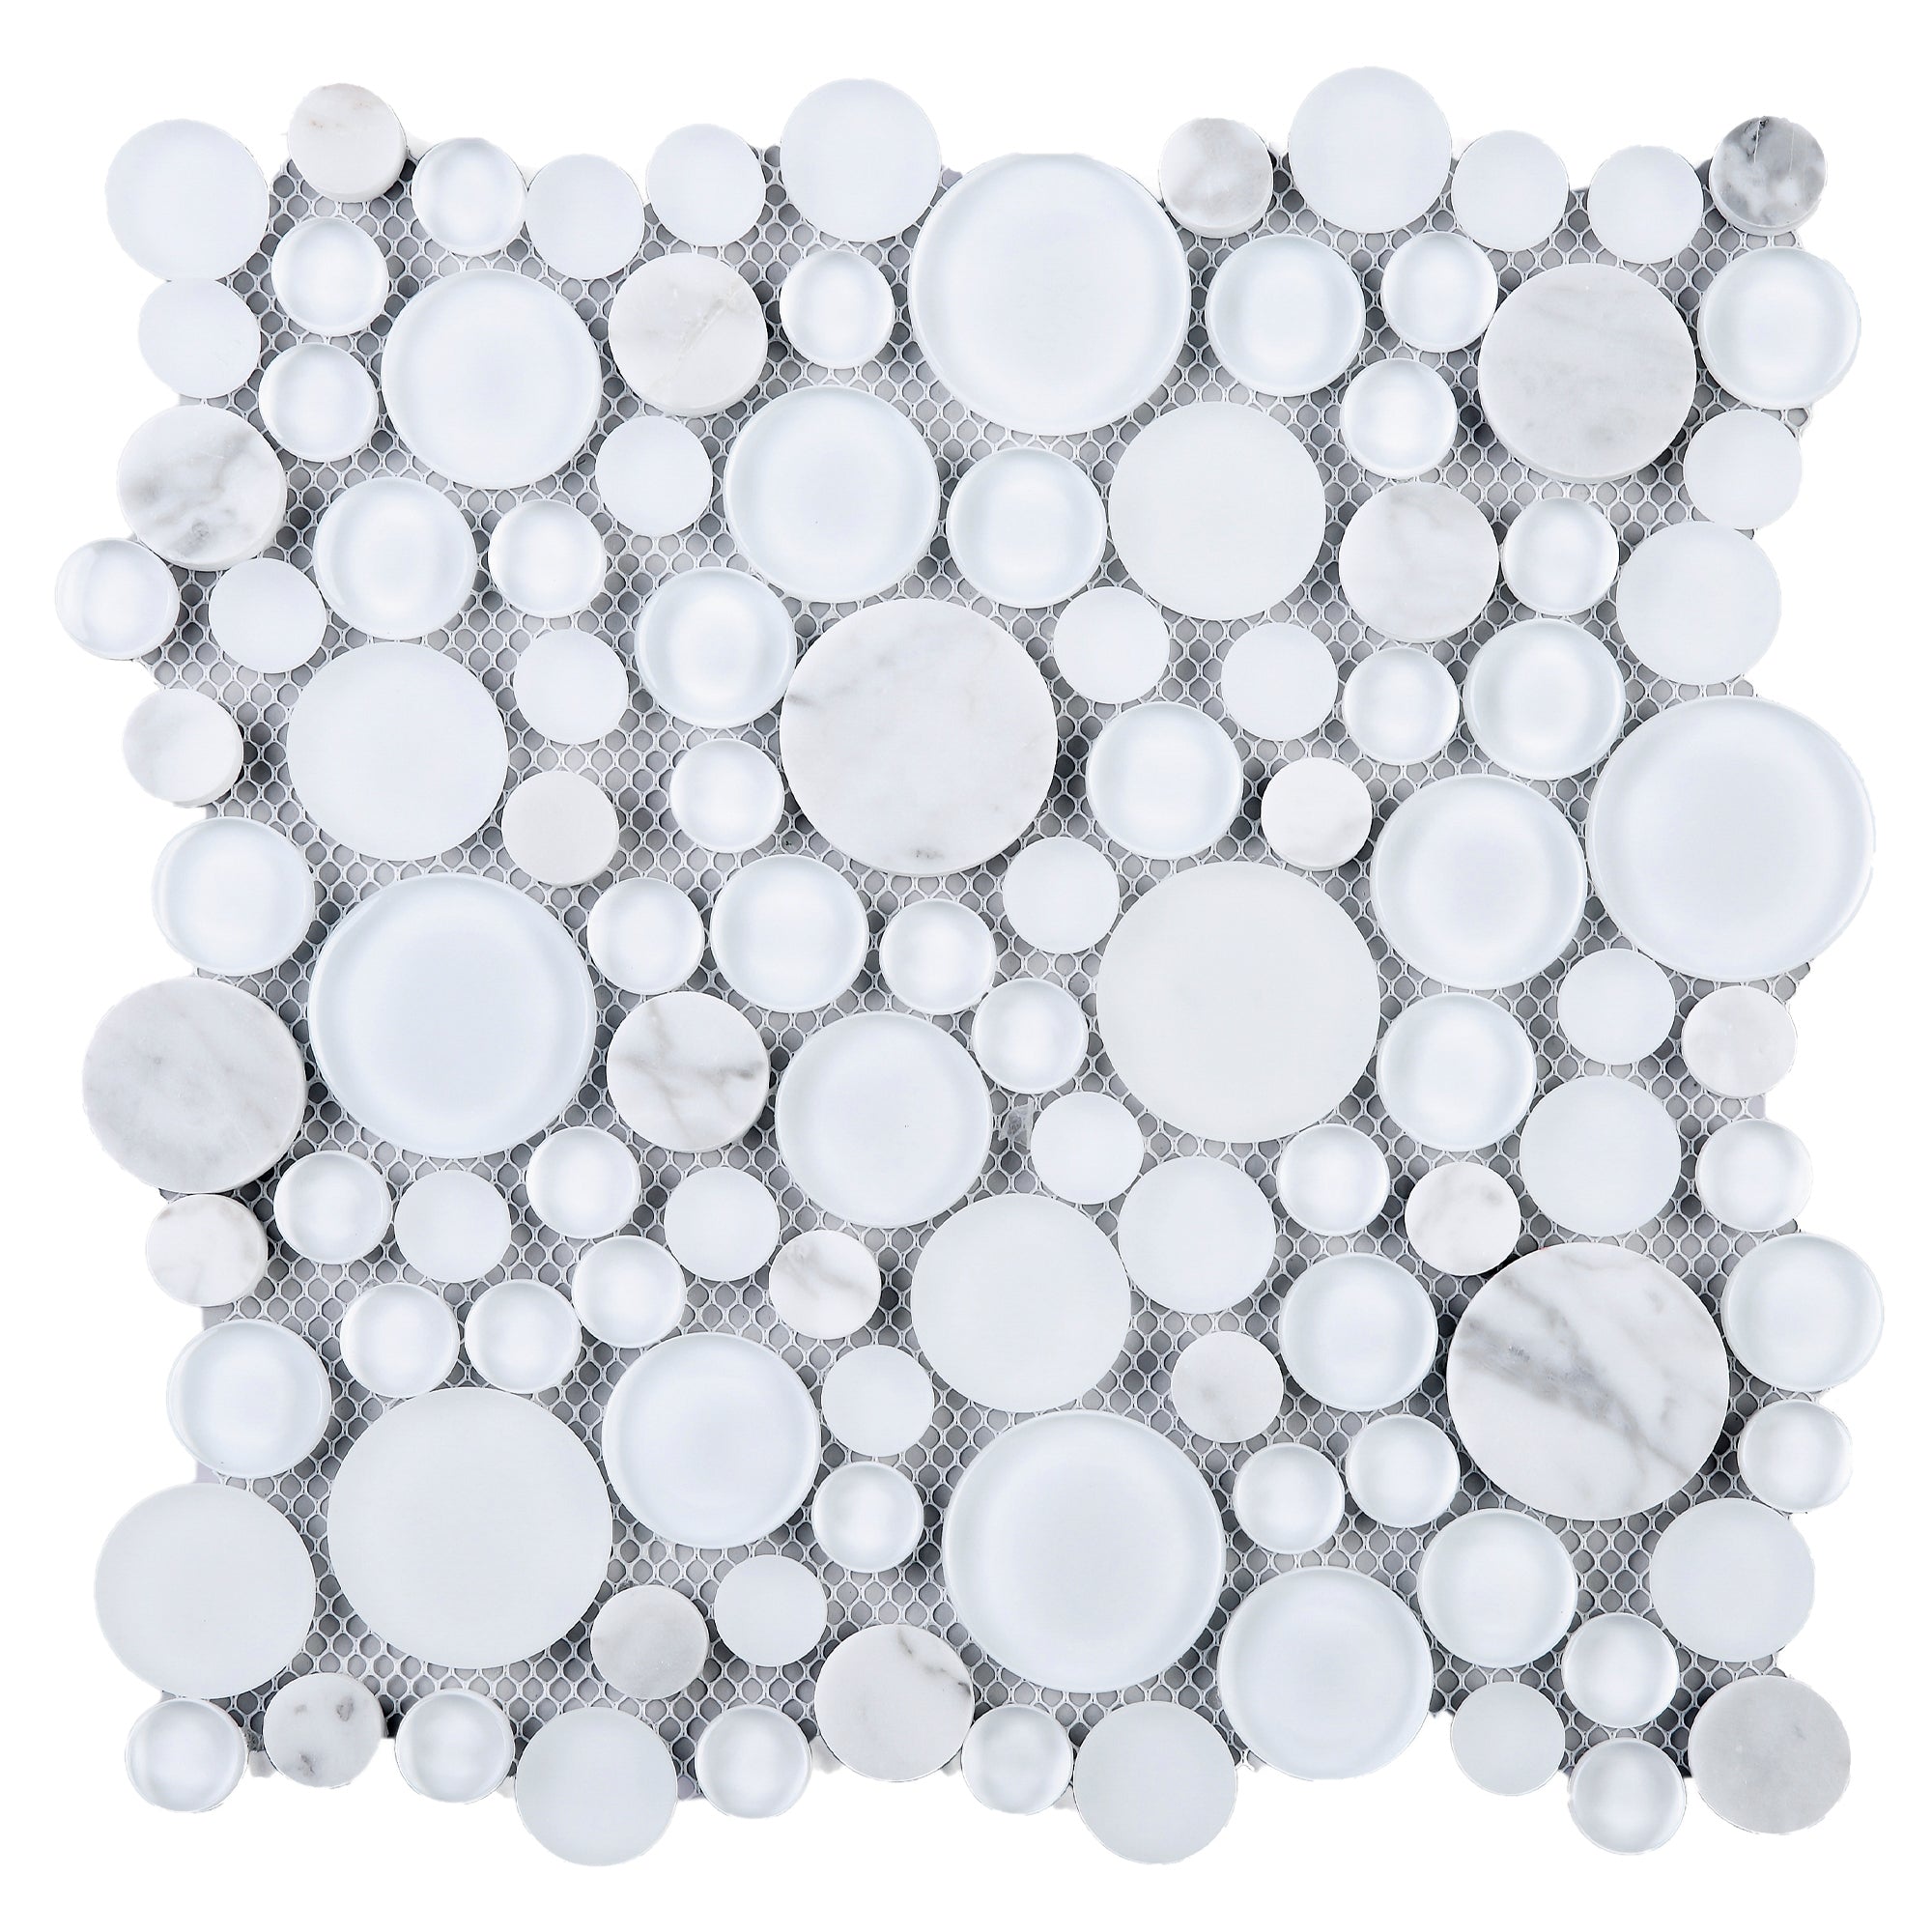 TBUBWG-02 Random Circle Glass Mix Stone Mosaic Tile in White 